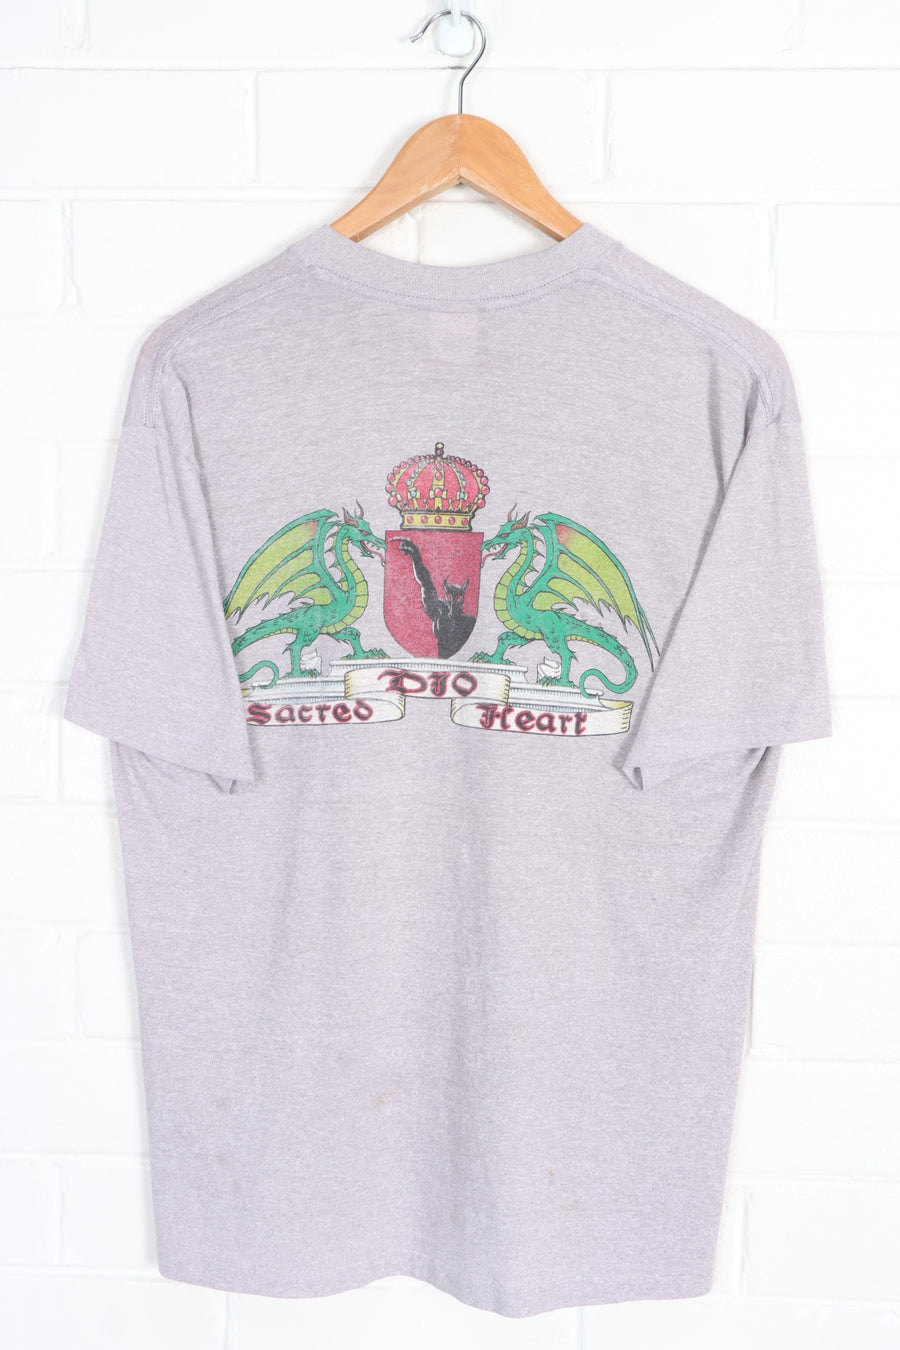 Vintage DIO 1985 Sacred Heart Front Back Single Stitch T-Shirt USA Made (L)